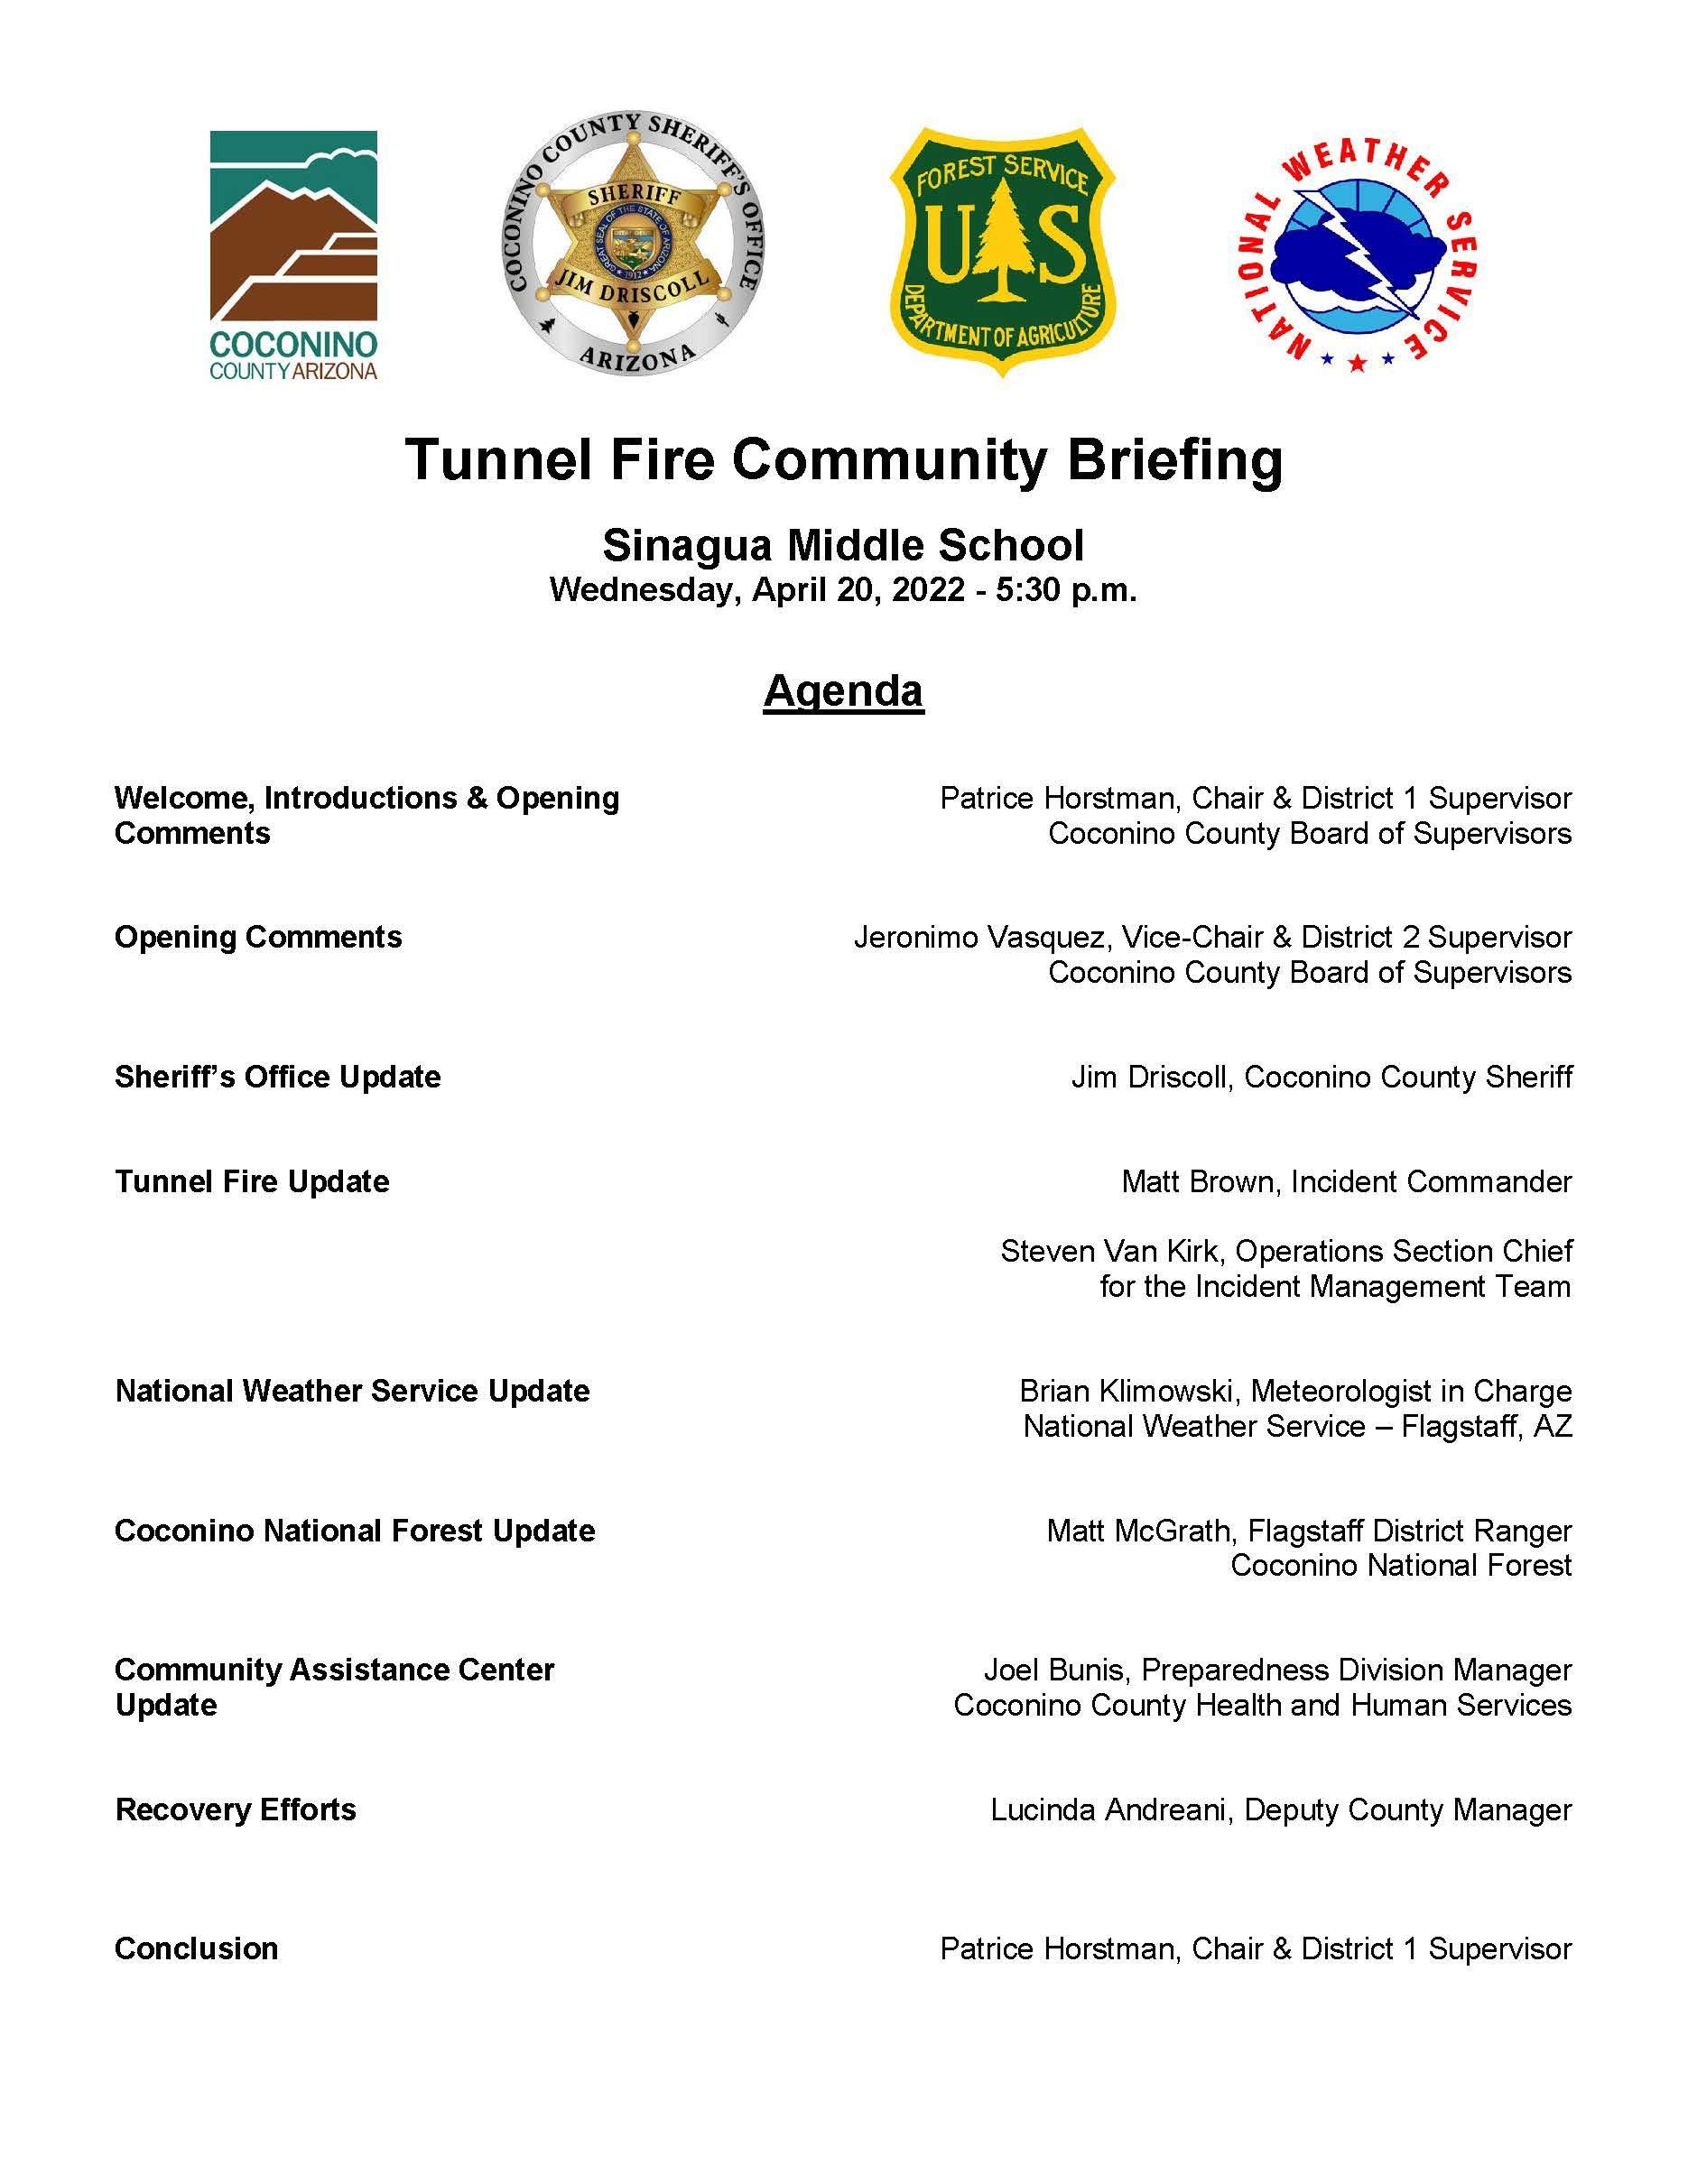 Tunnel Fire Community Meeting Agenda 4-20-22